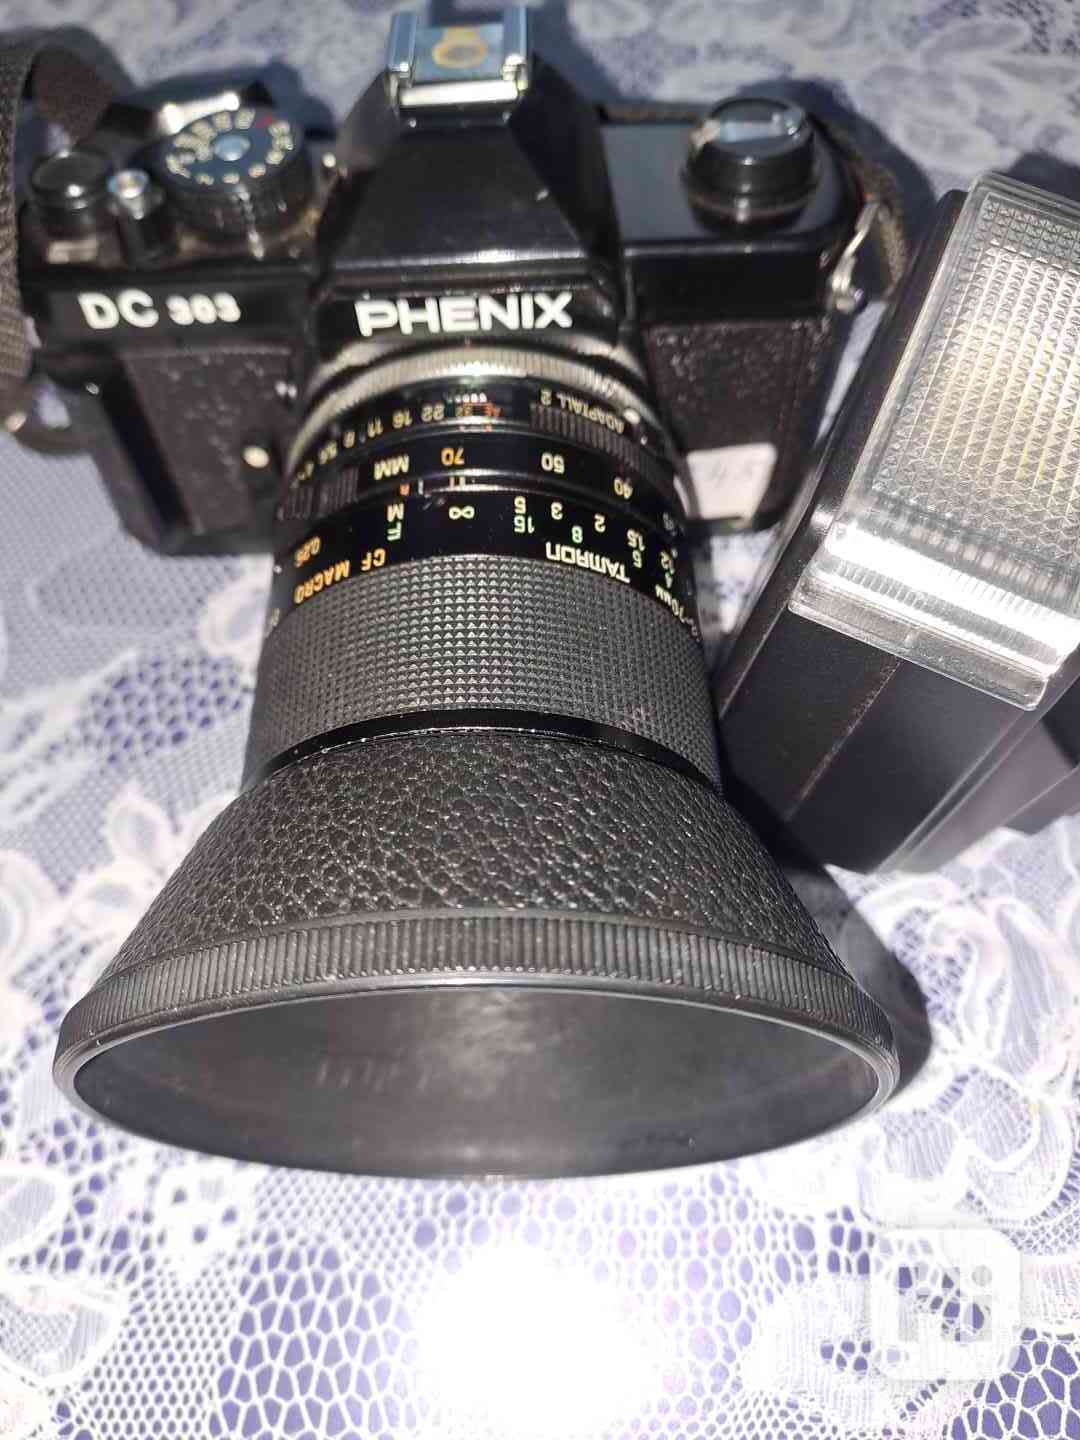 Fotoaparát Phenix DC 303 +blesk - foto 1